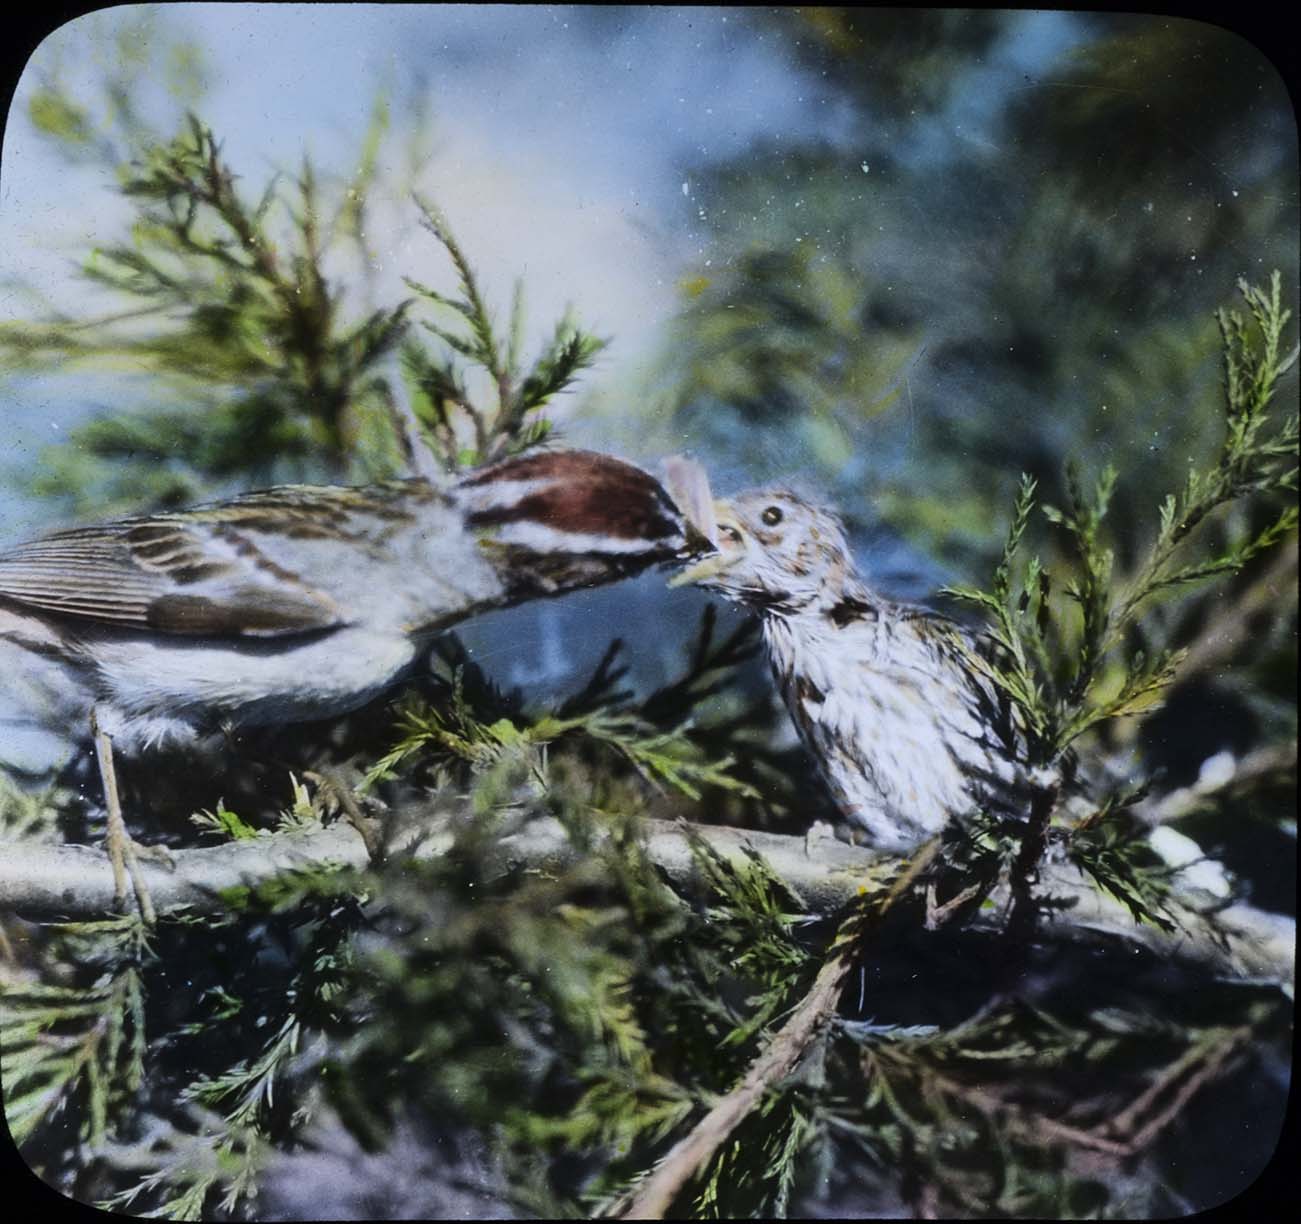 Lantern slide of a Chipping Sparrow feeding a young bird